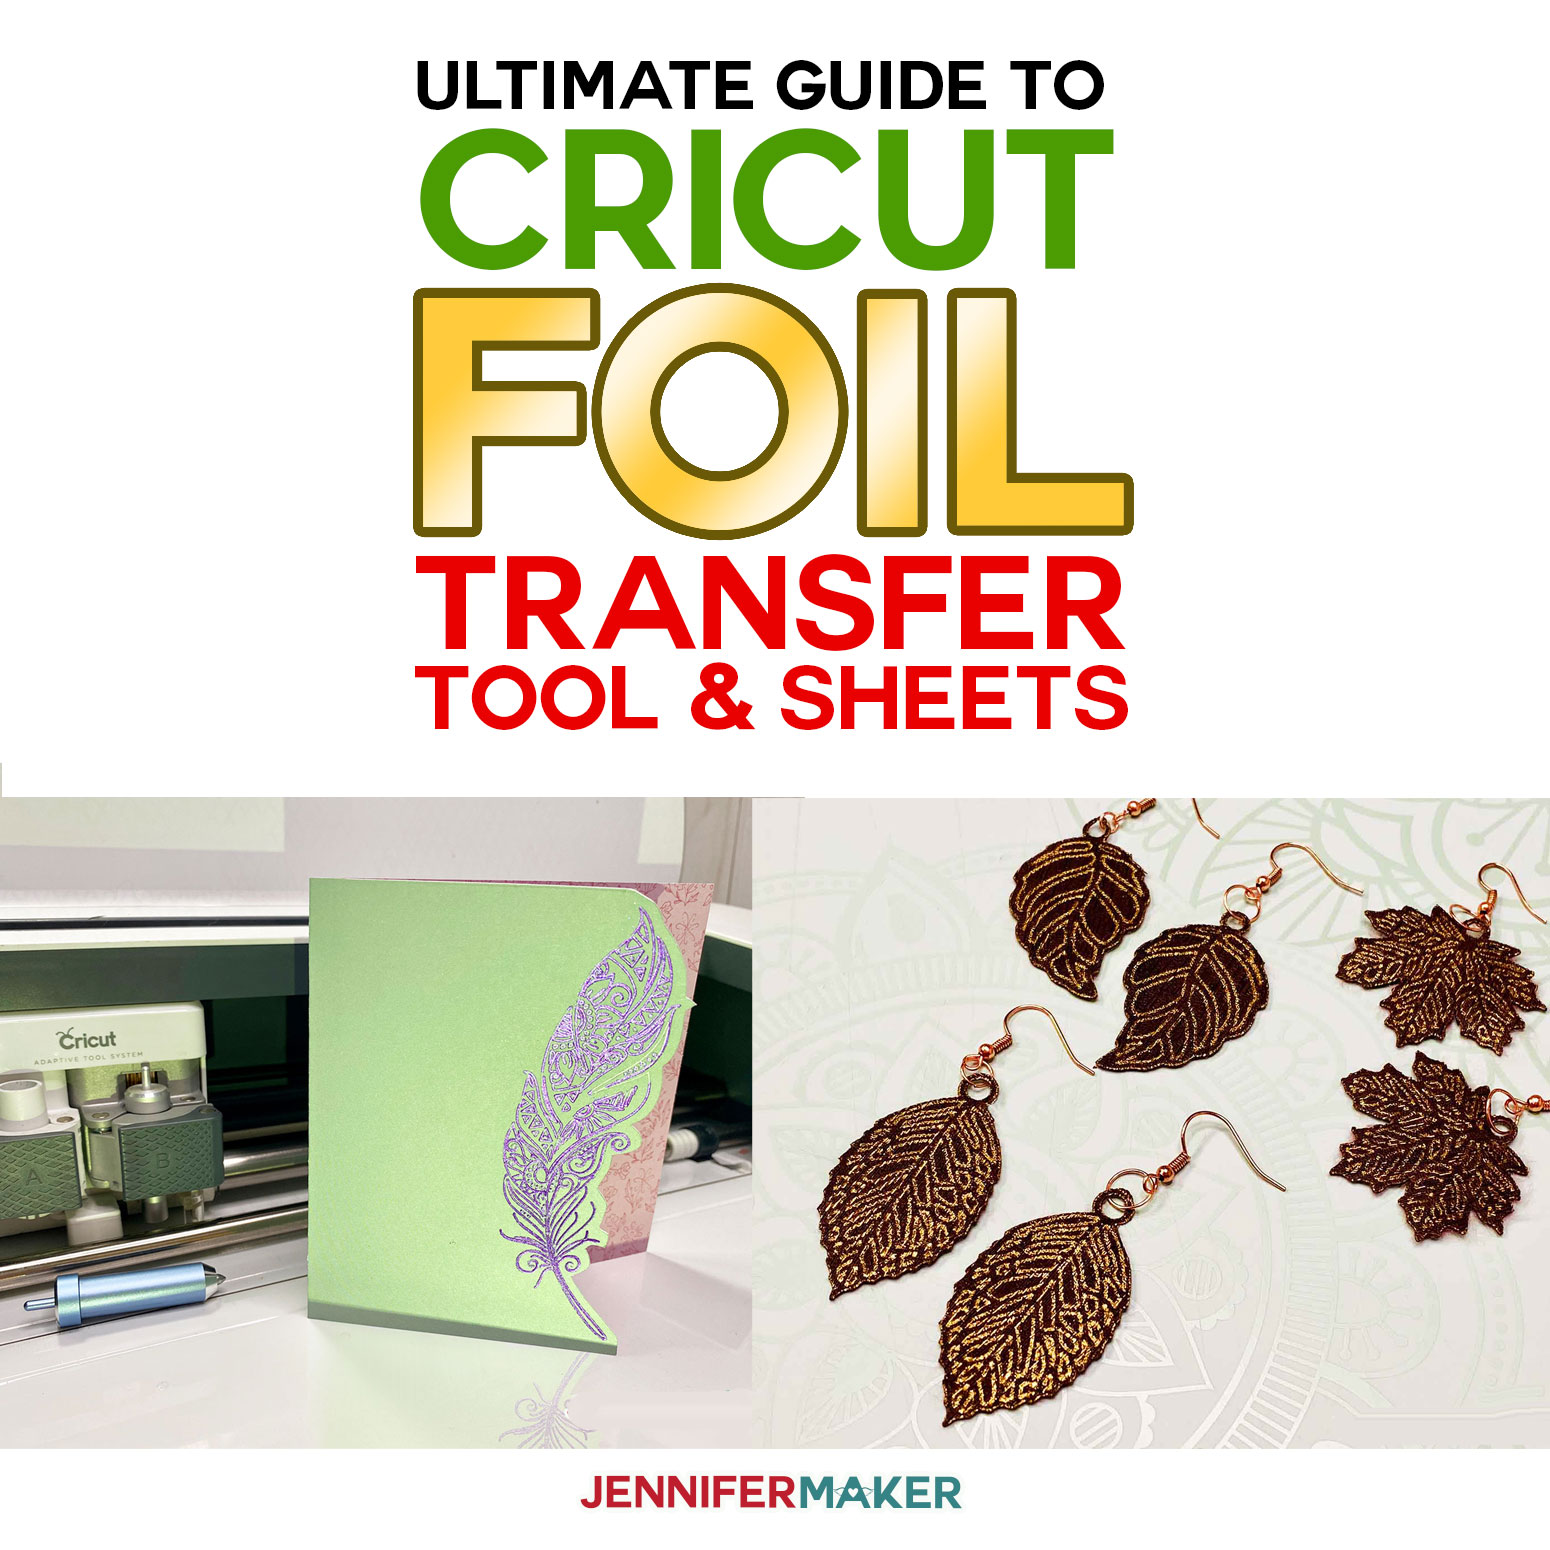 Cricut Foil Transfer Tool & Transfer Sheet Guide to Foiling Cards, Earrings, and Decorations #cricut #cricutfoiltransfer #tutorial